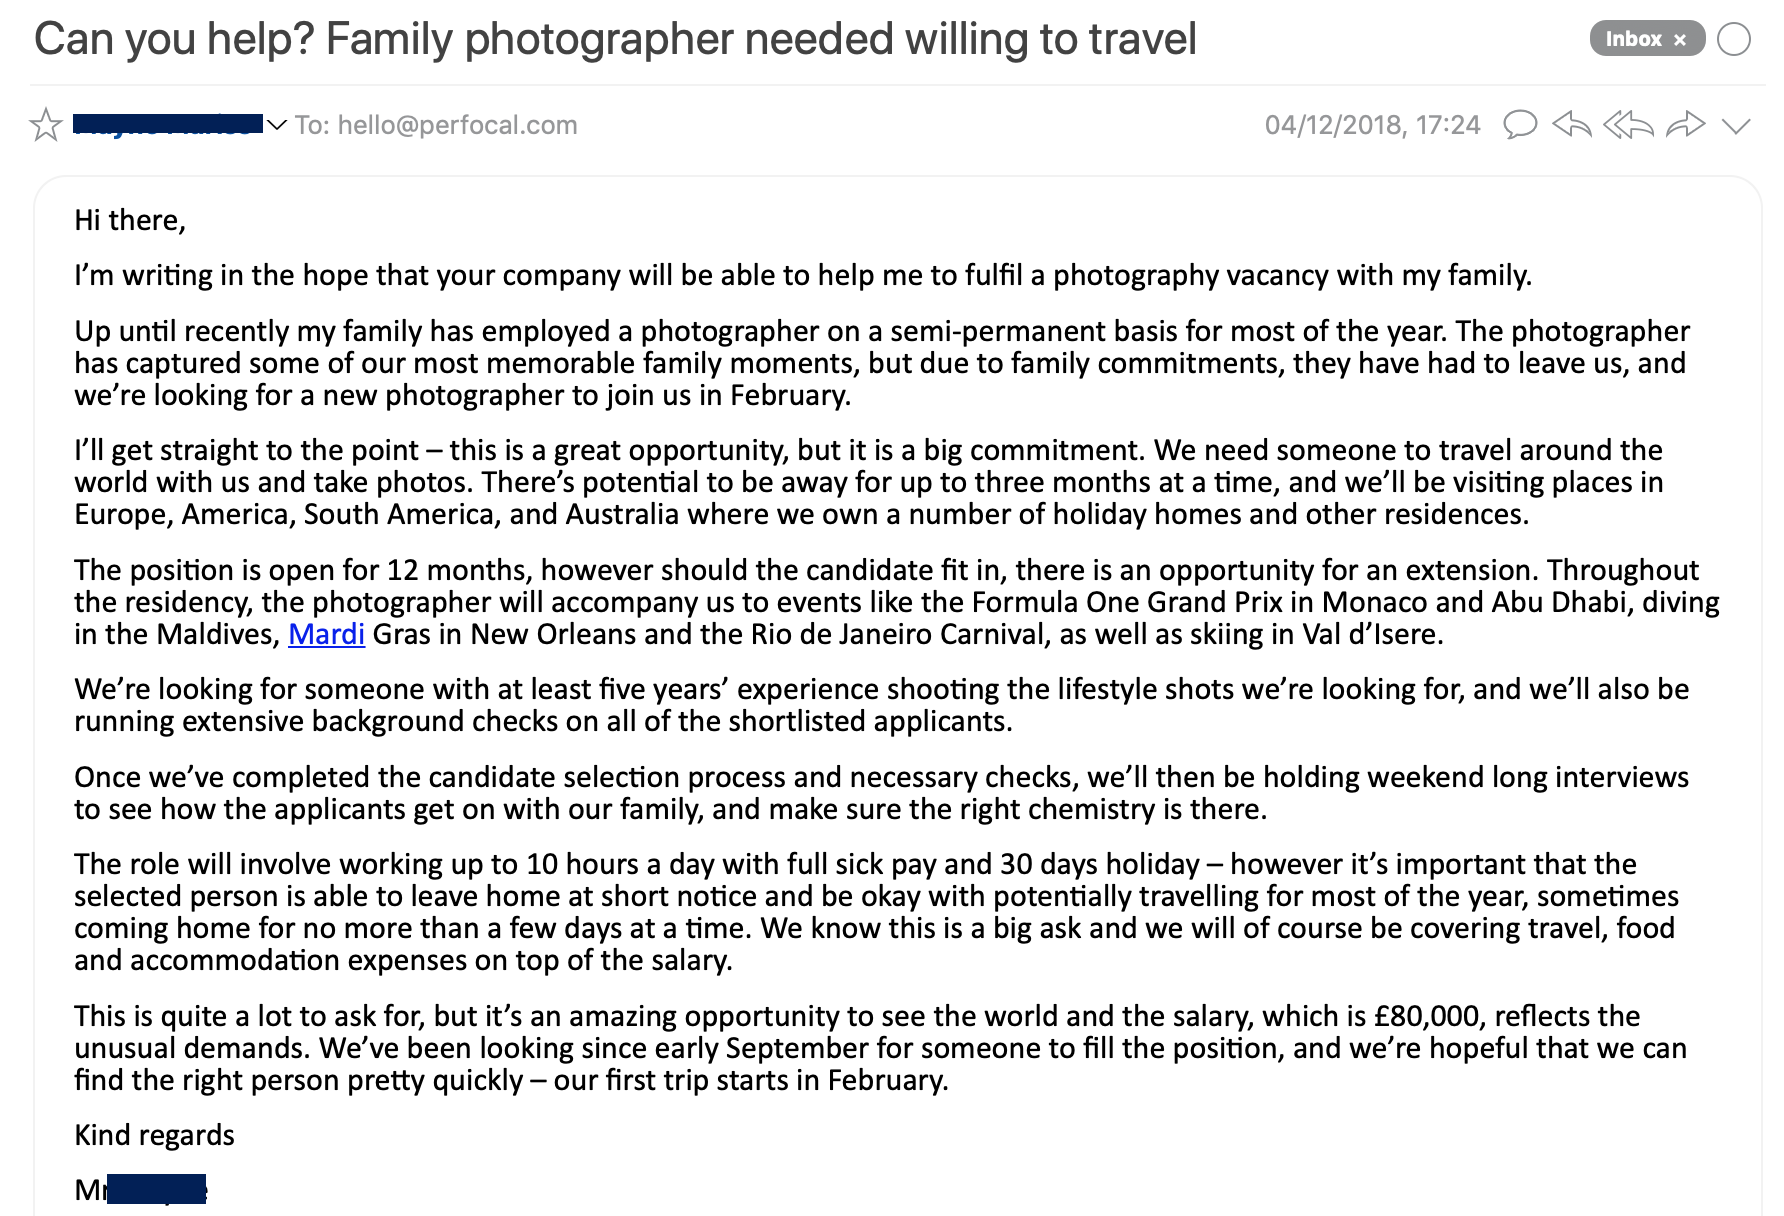 familia-rica-busca-fotografo-viajar-mundo-solicitud-empleo